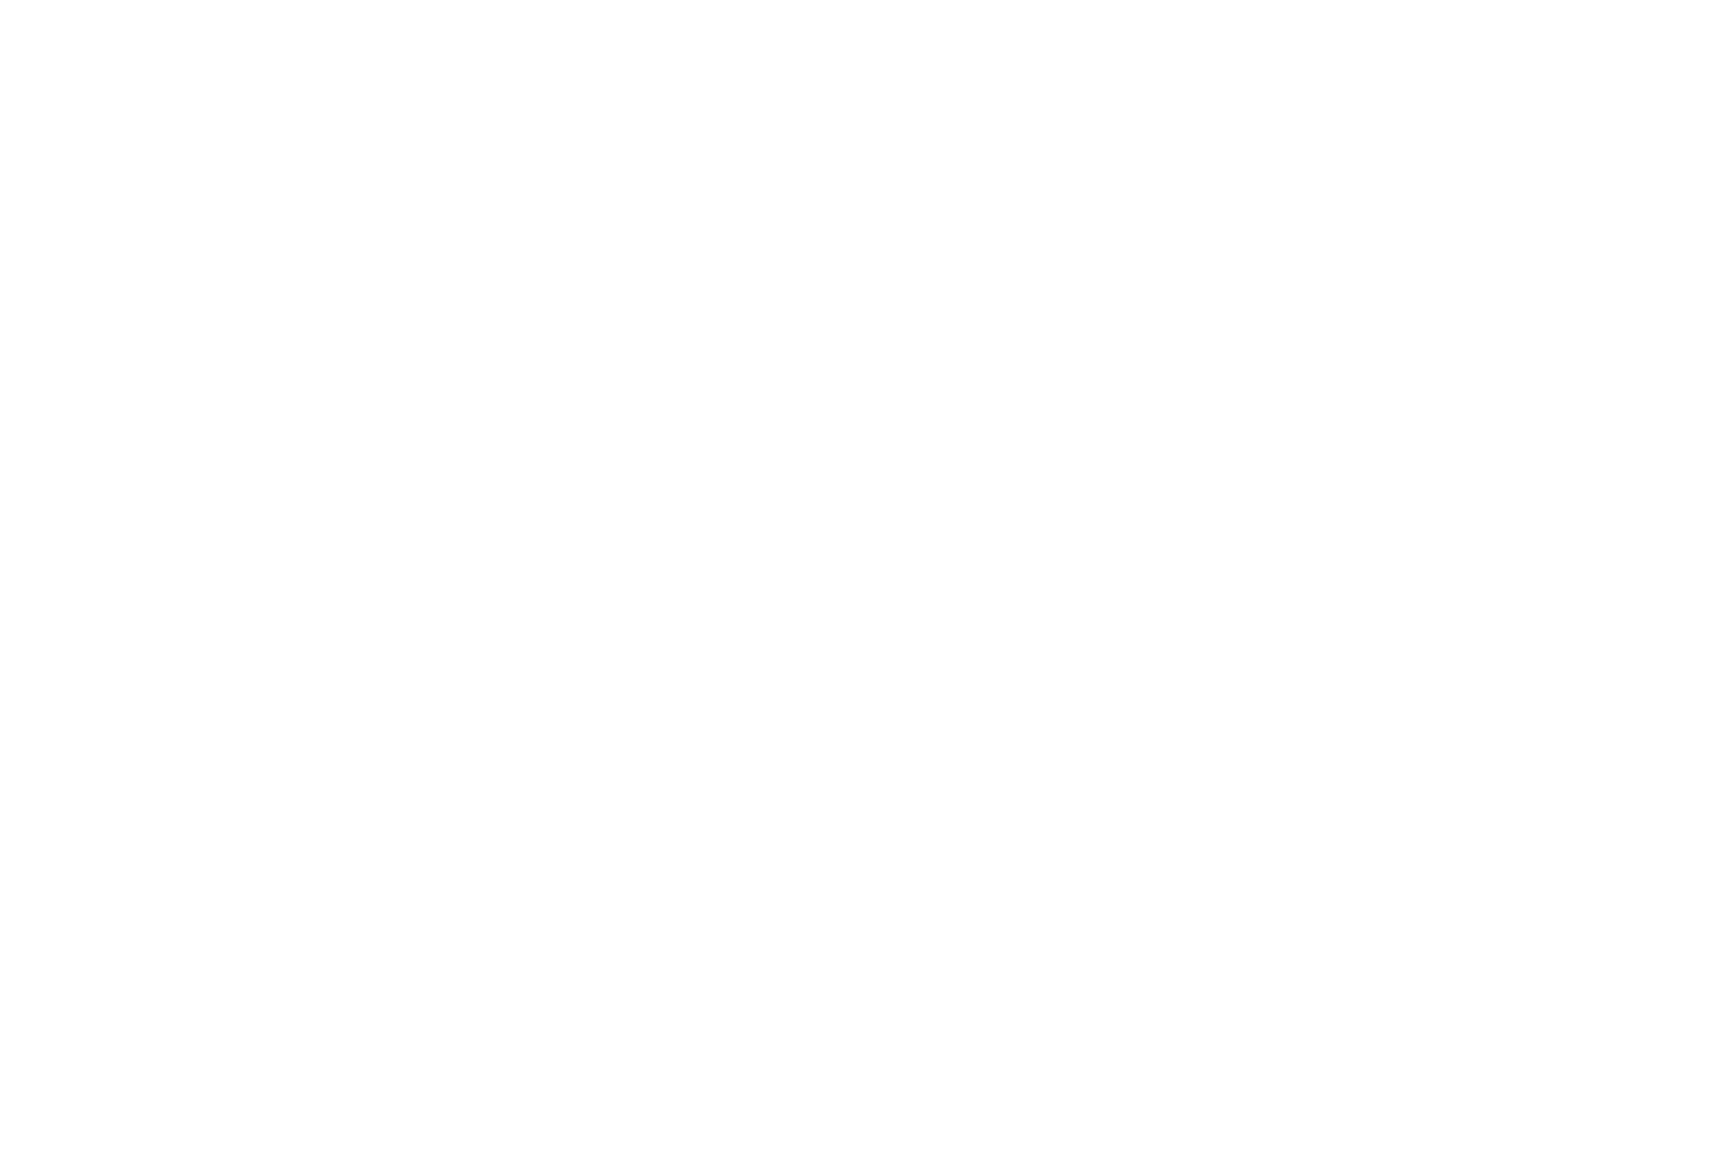 BEST FEATURE FILM NOMINEE - Canadian International Faith Family Film Festival - 2020